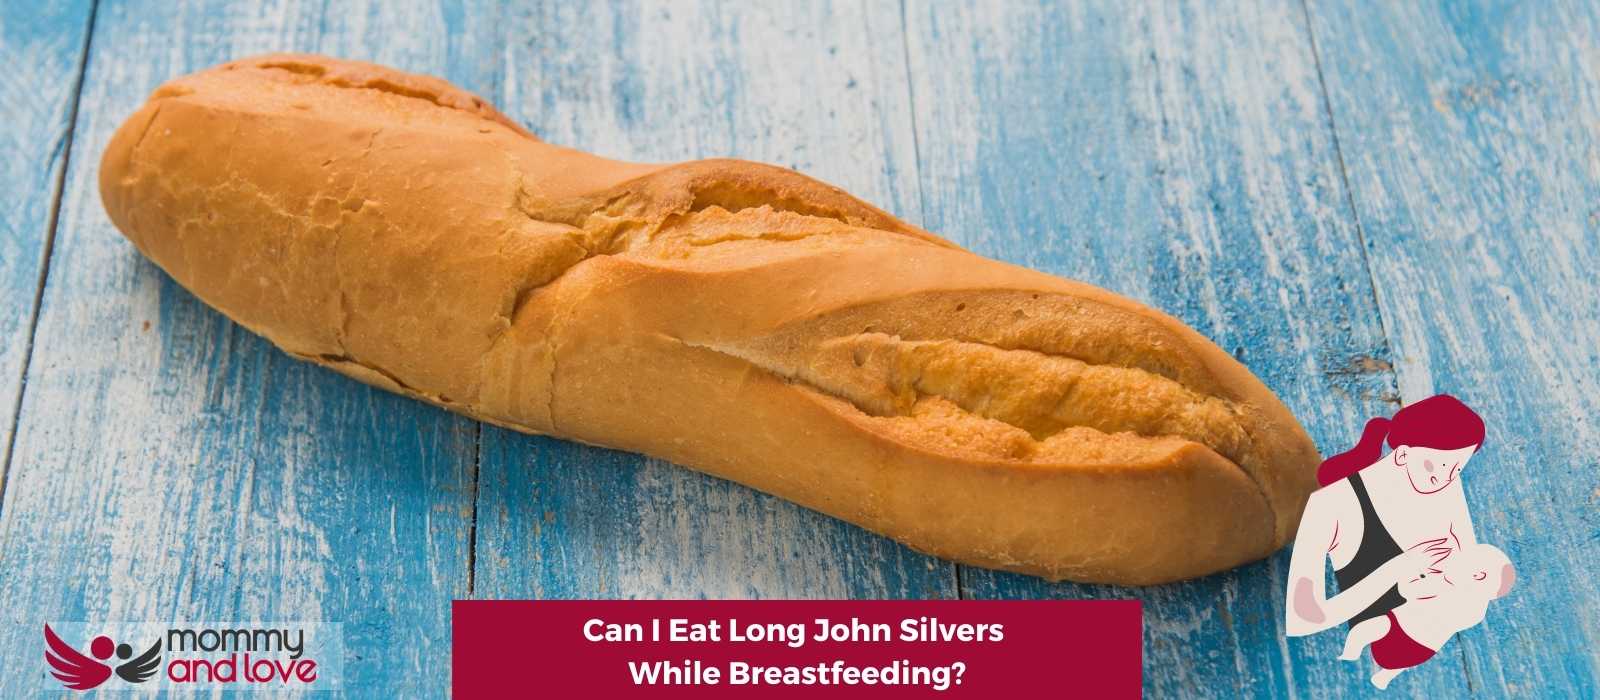 Can I Eat Long John Silvers While Breastfeeding